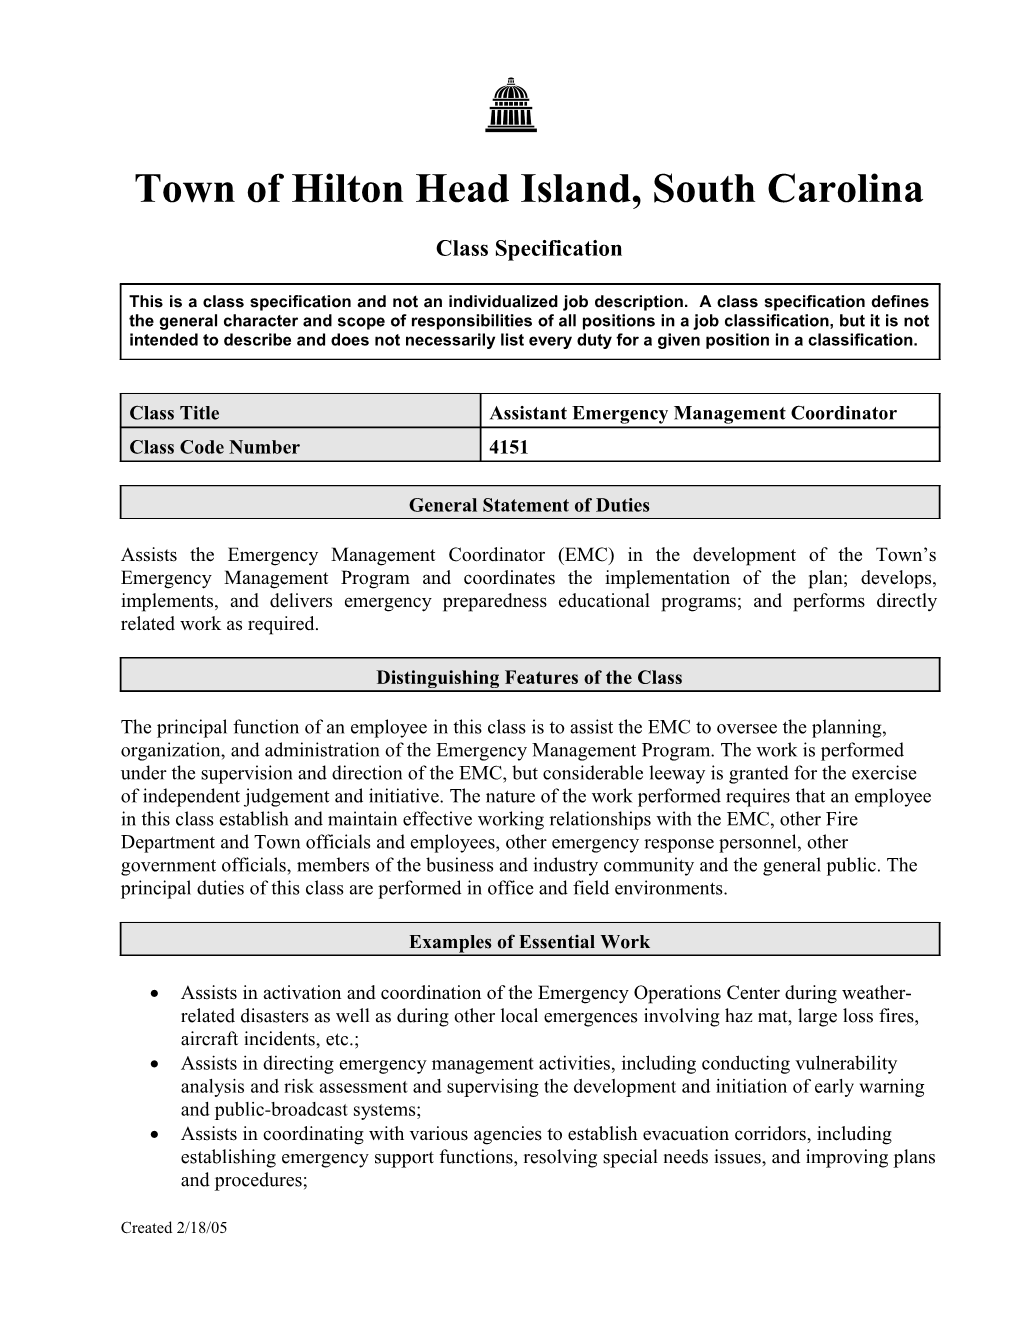 Town of Hilton Head Island, South Carolina